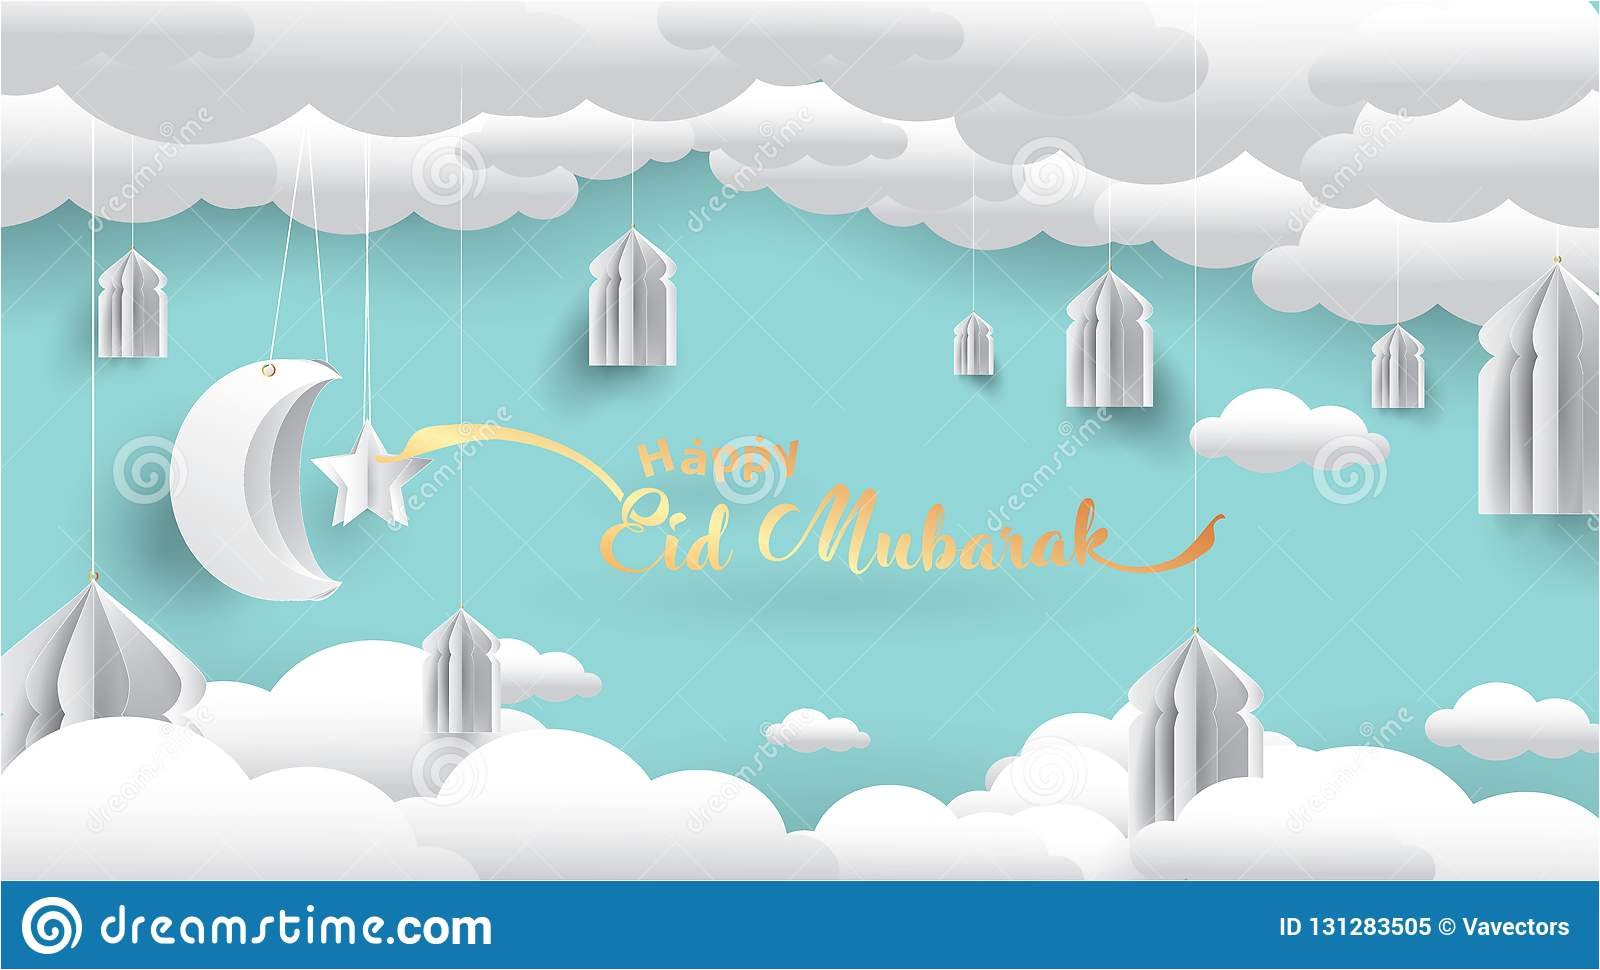 ramadan greeting card eid mubarak illustration kareem cartoon vector wishing islamic festival banner poster background flyer 131283505 jpg